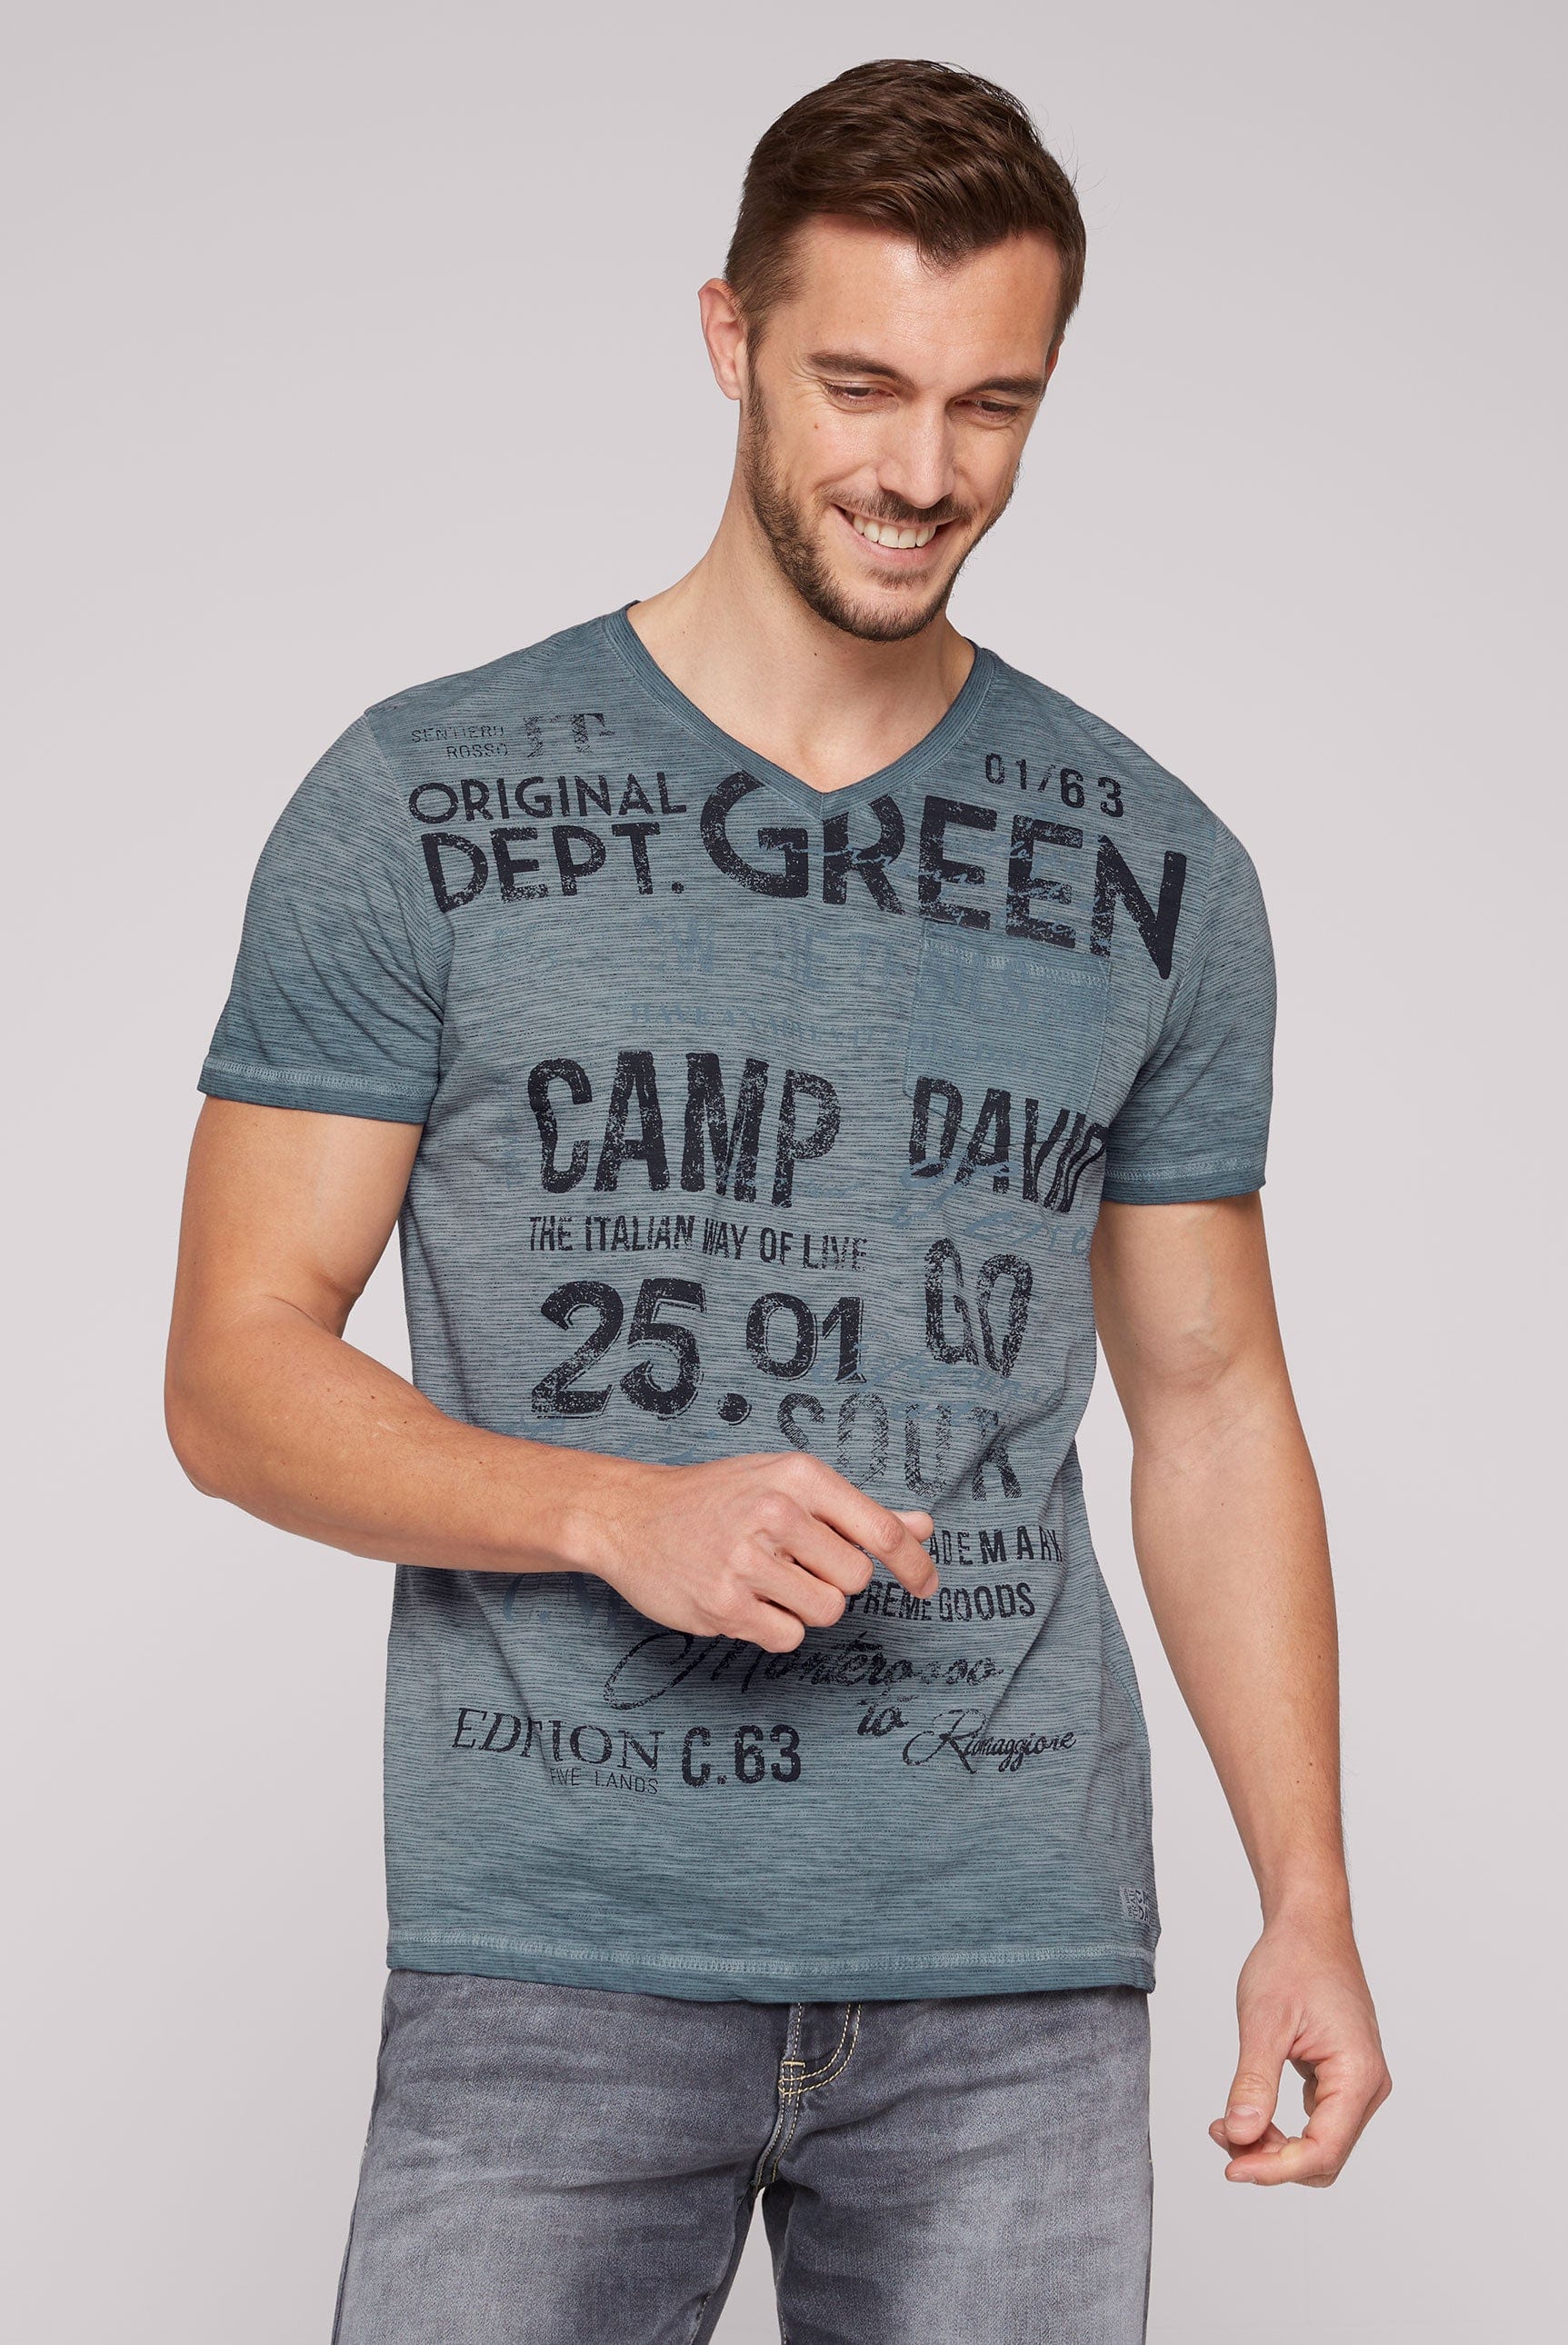 Camp David T-Shirts: Quality and Versatility | Stateshop Fashion